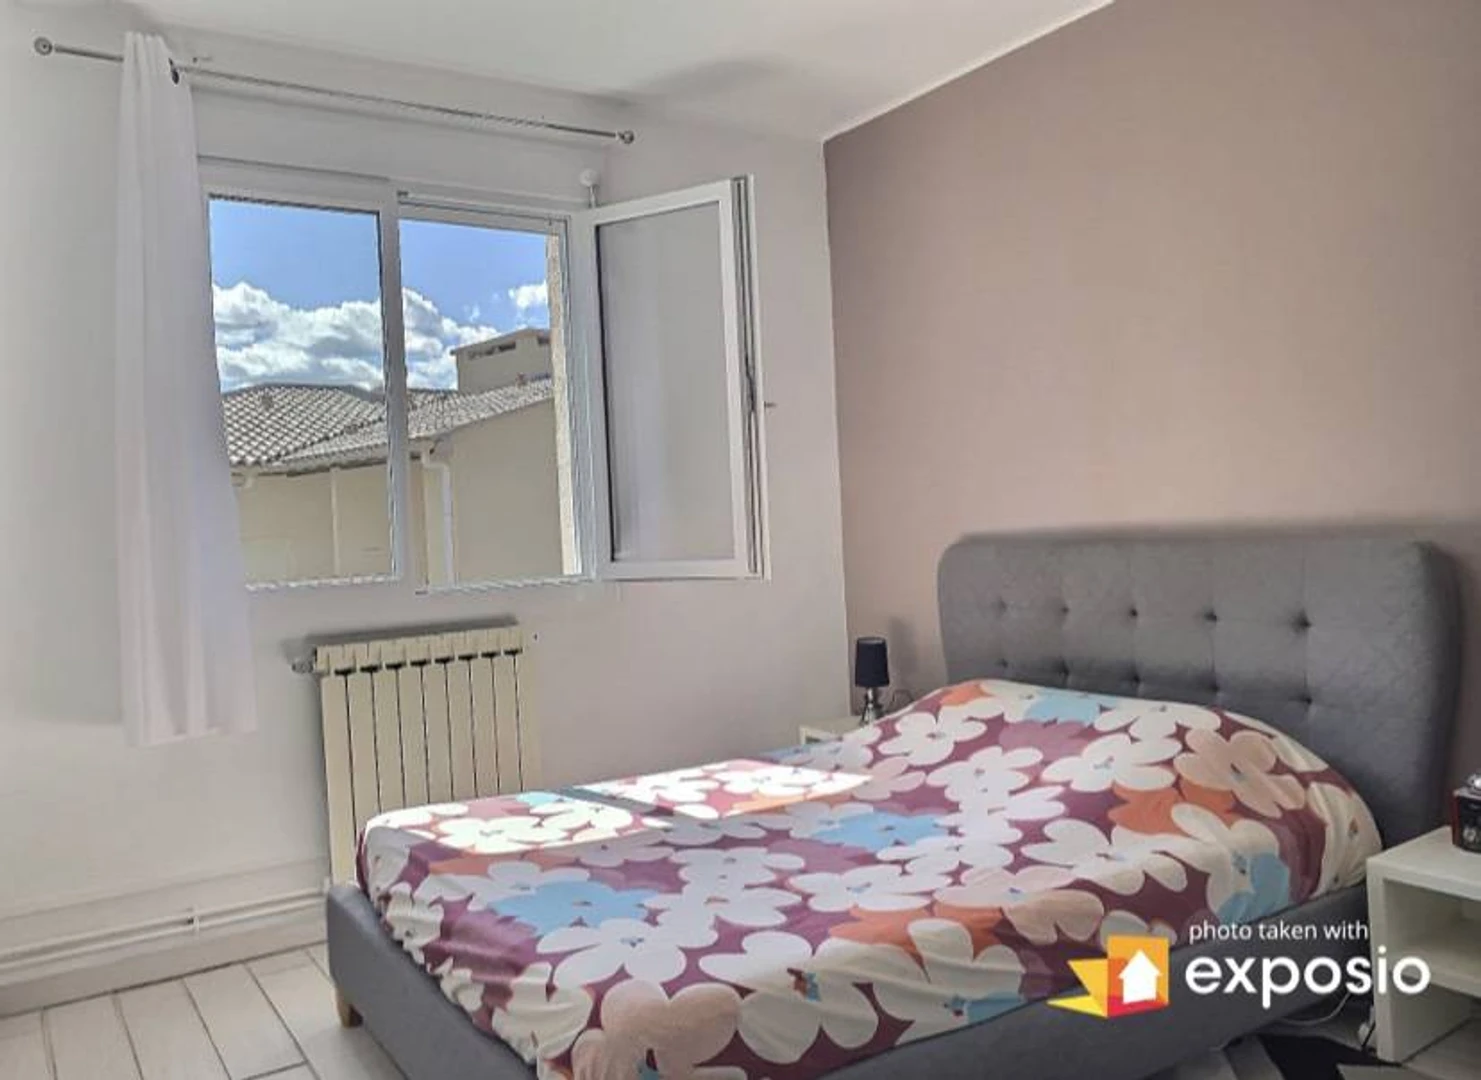 Cheap private room in Nîmes